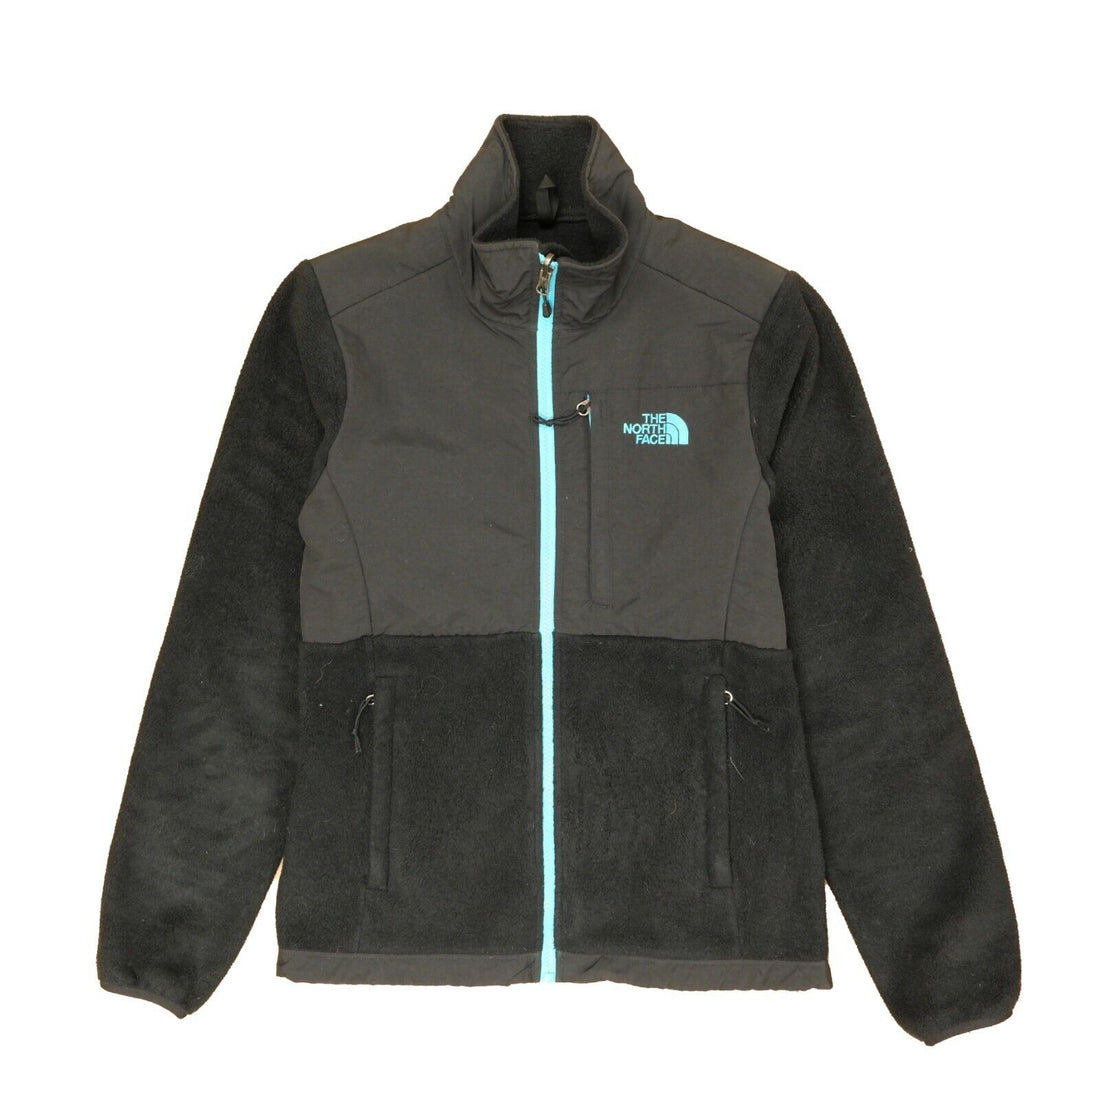 The North Face Denali Full Zip Fleece Jacket Size XS Black Teal